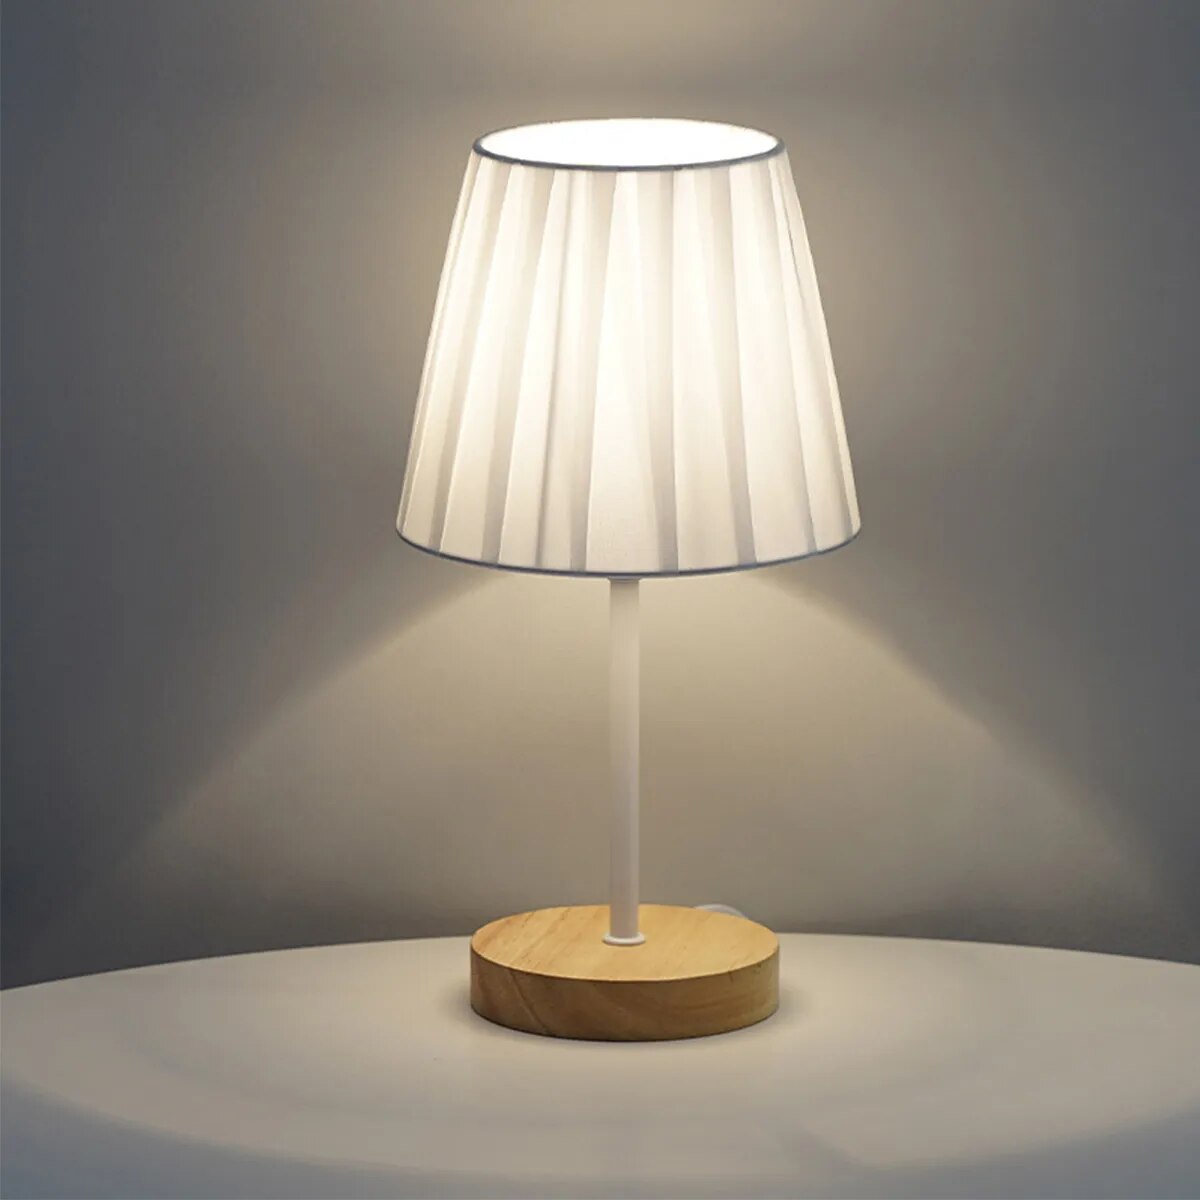 Lampe de chevet Bois Originale Simple - lampechevetdesign.com